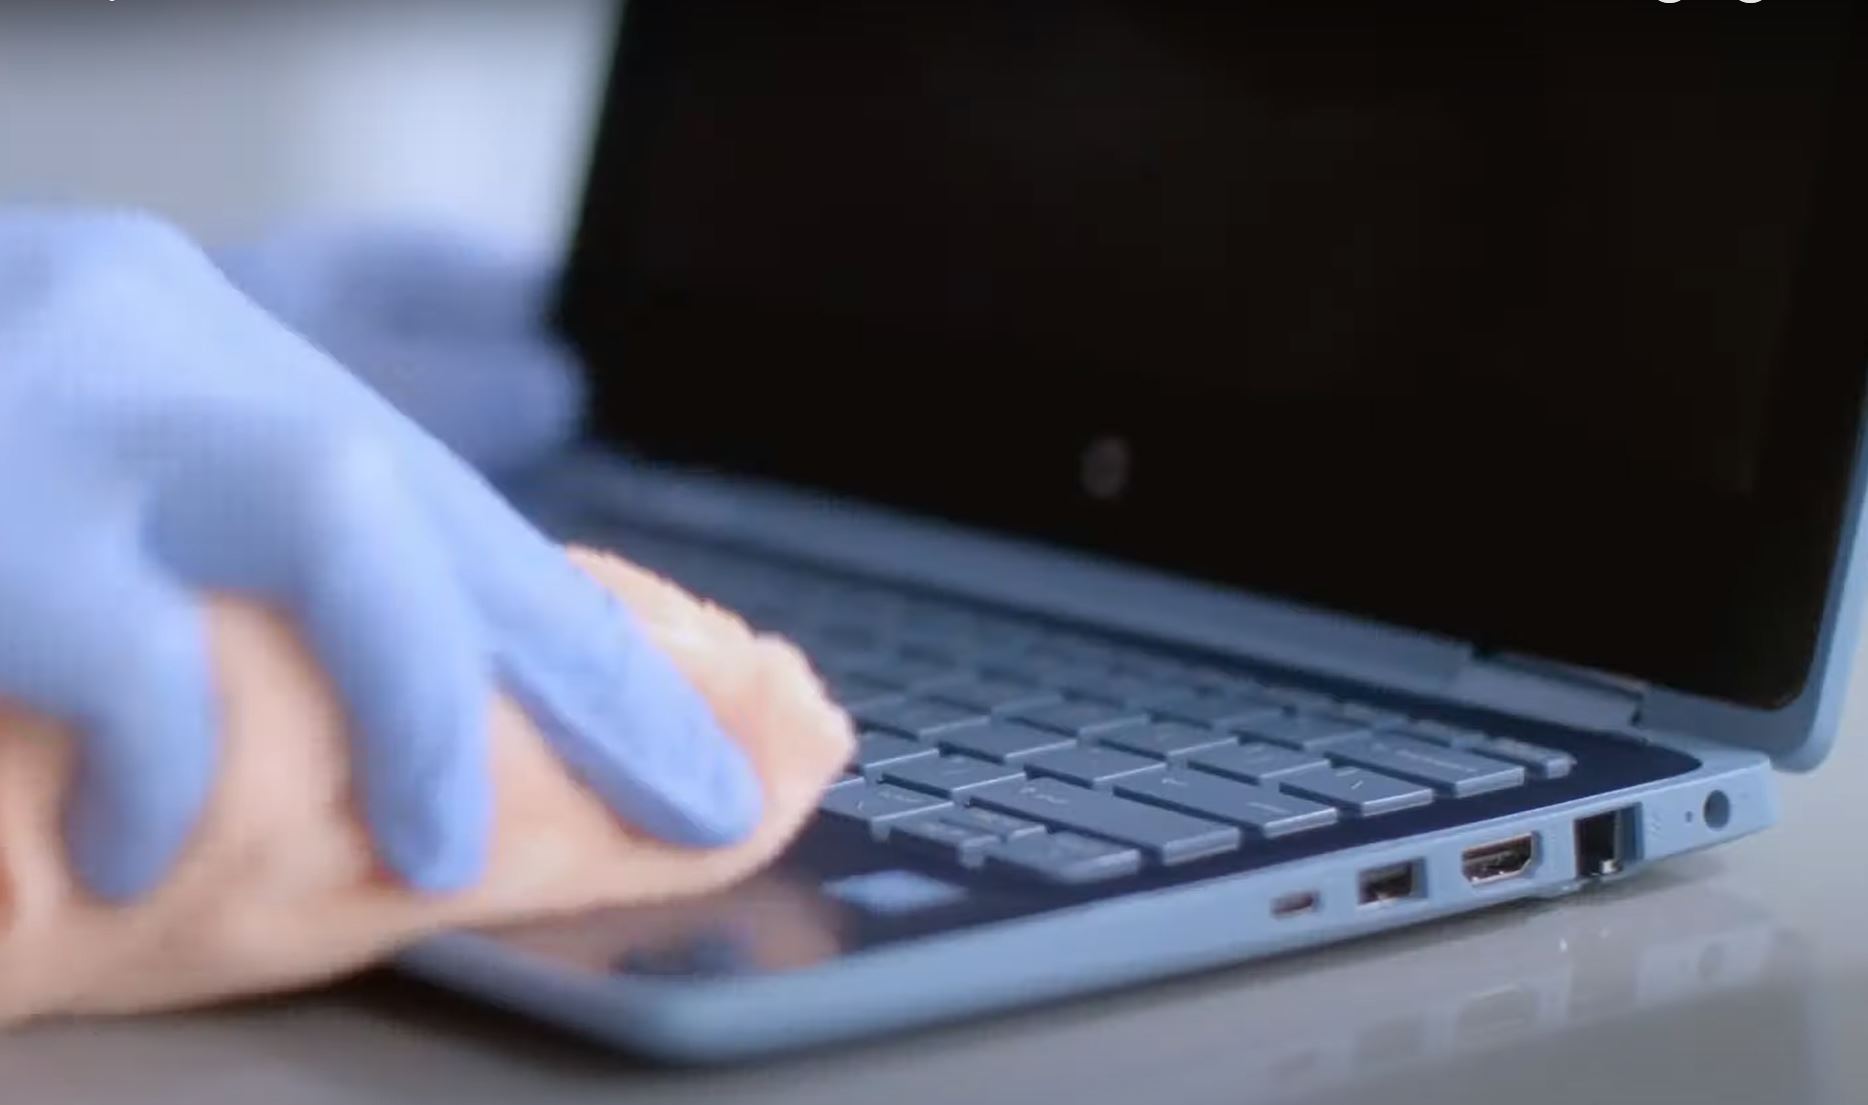 How to unlock keyboard on HP laptop